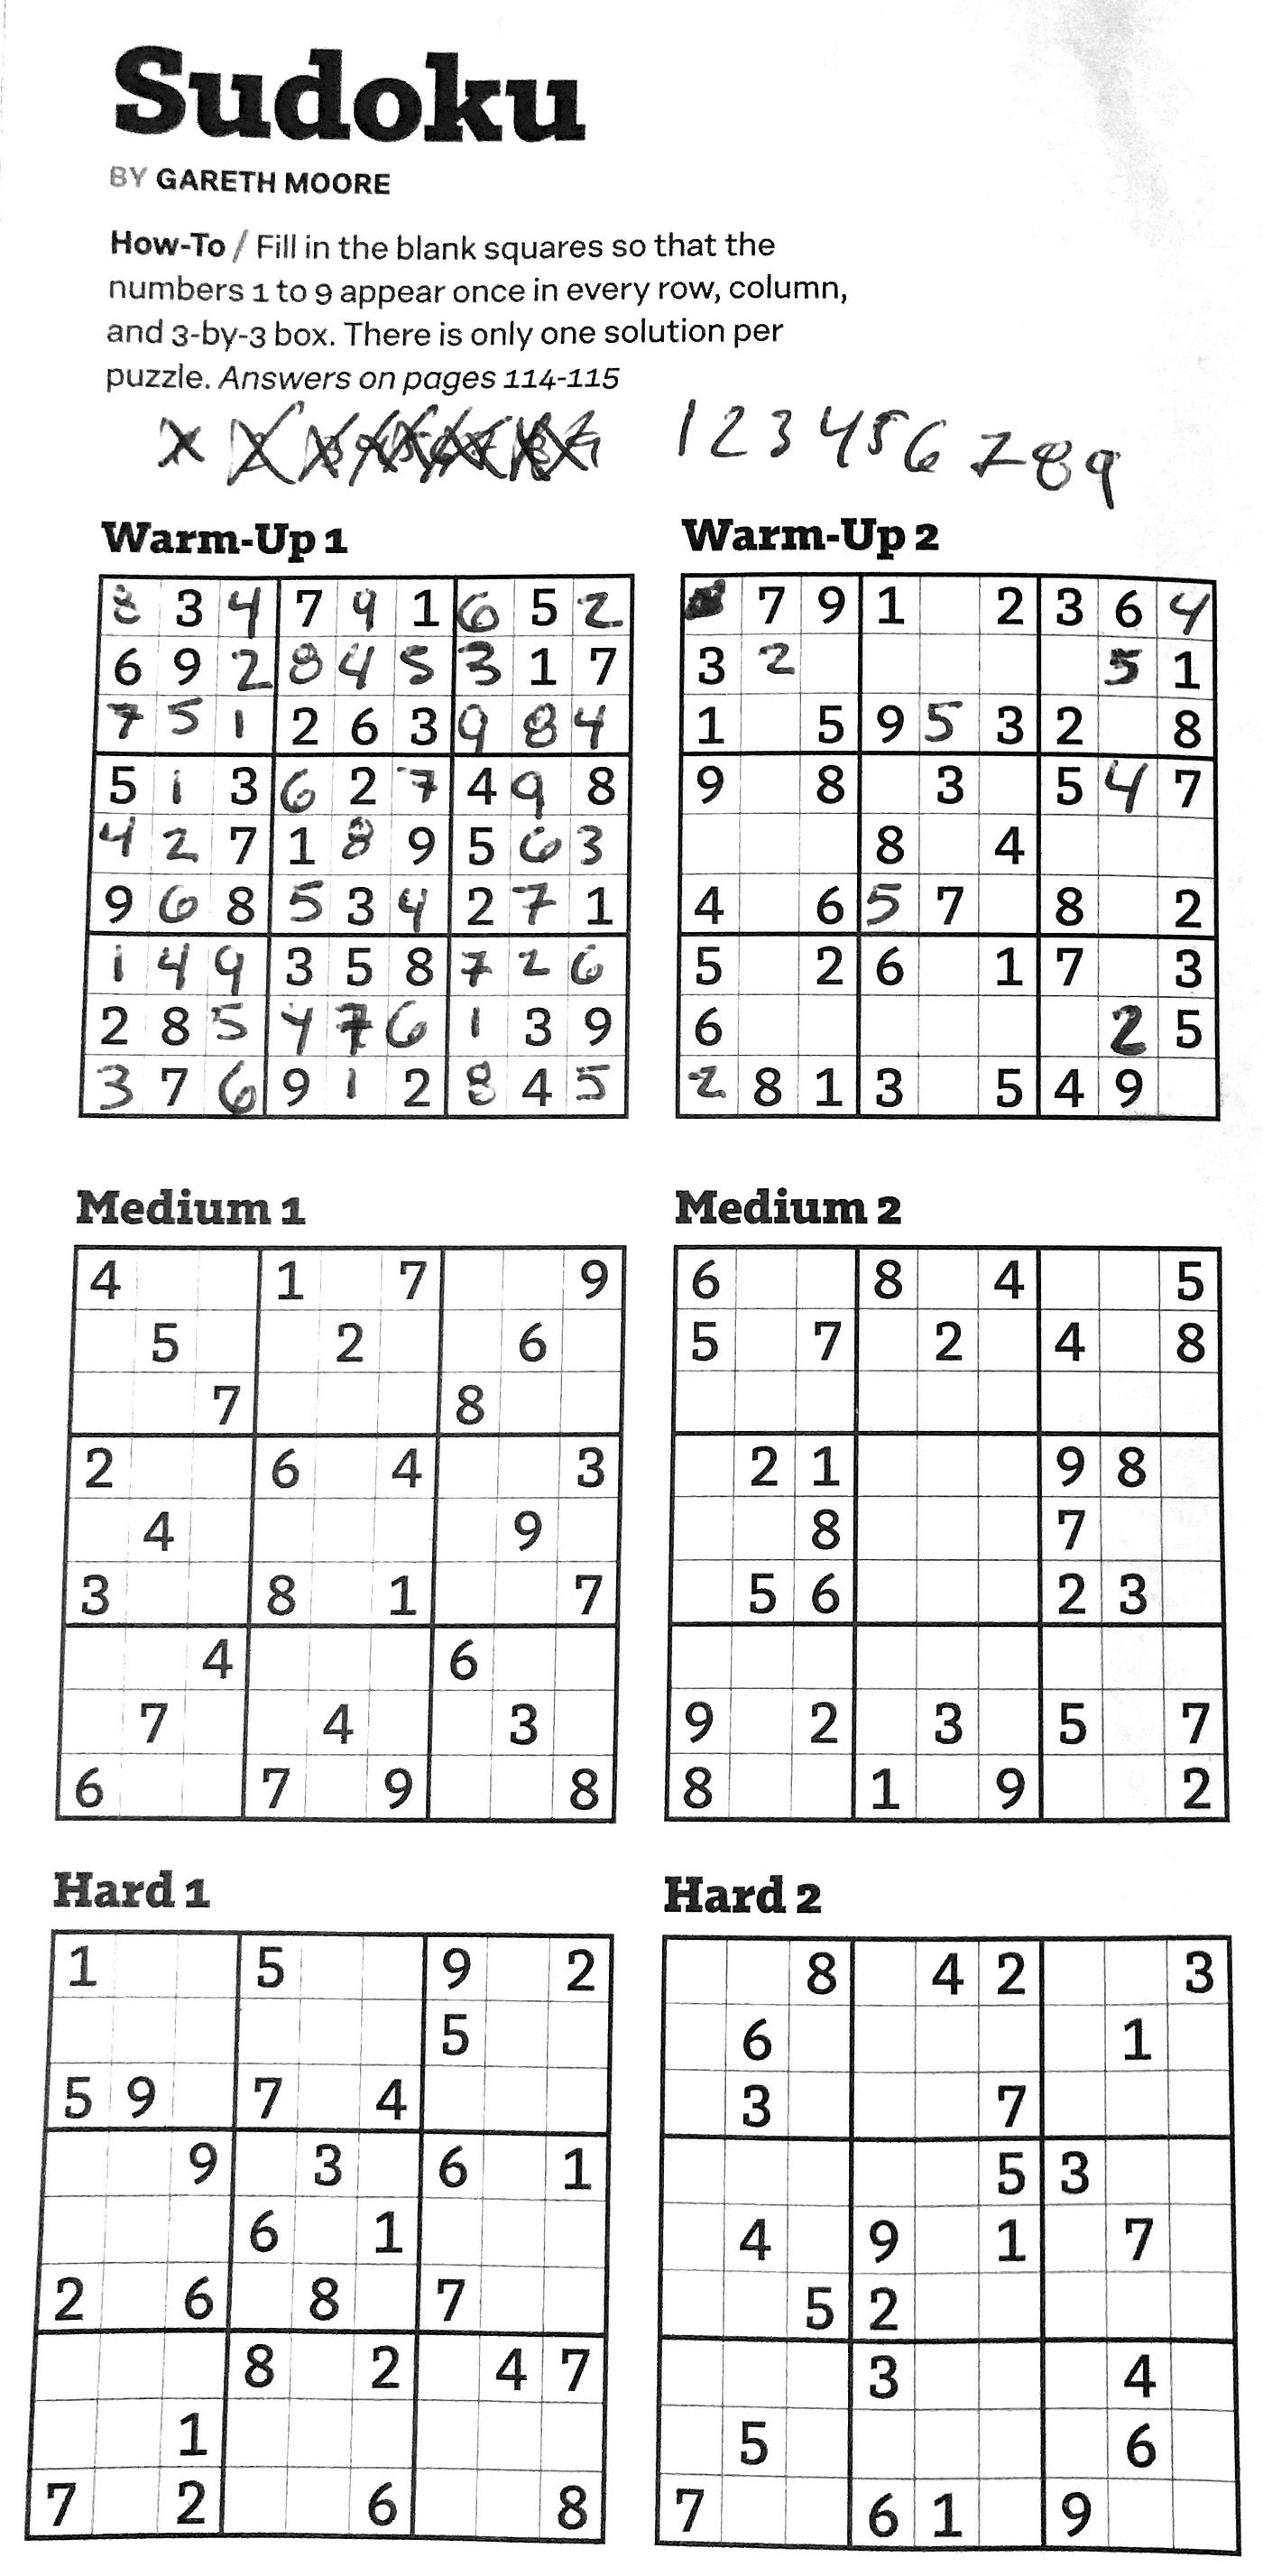 Sudoku Solver: Linear Programming Approach Using PuLP